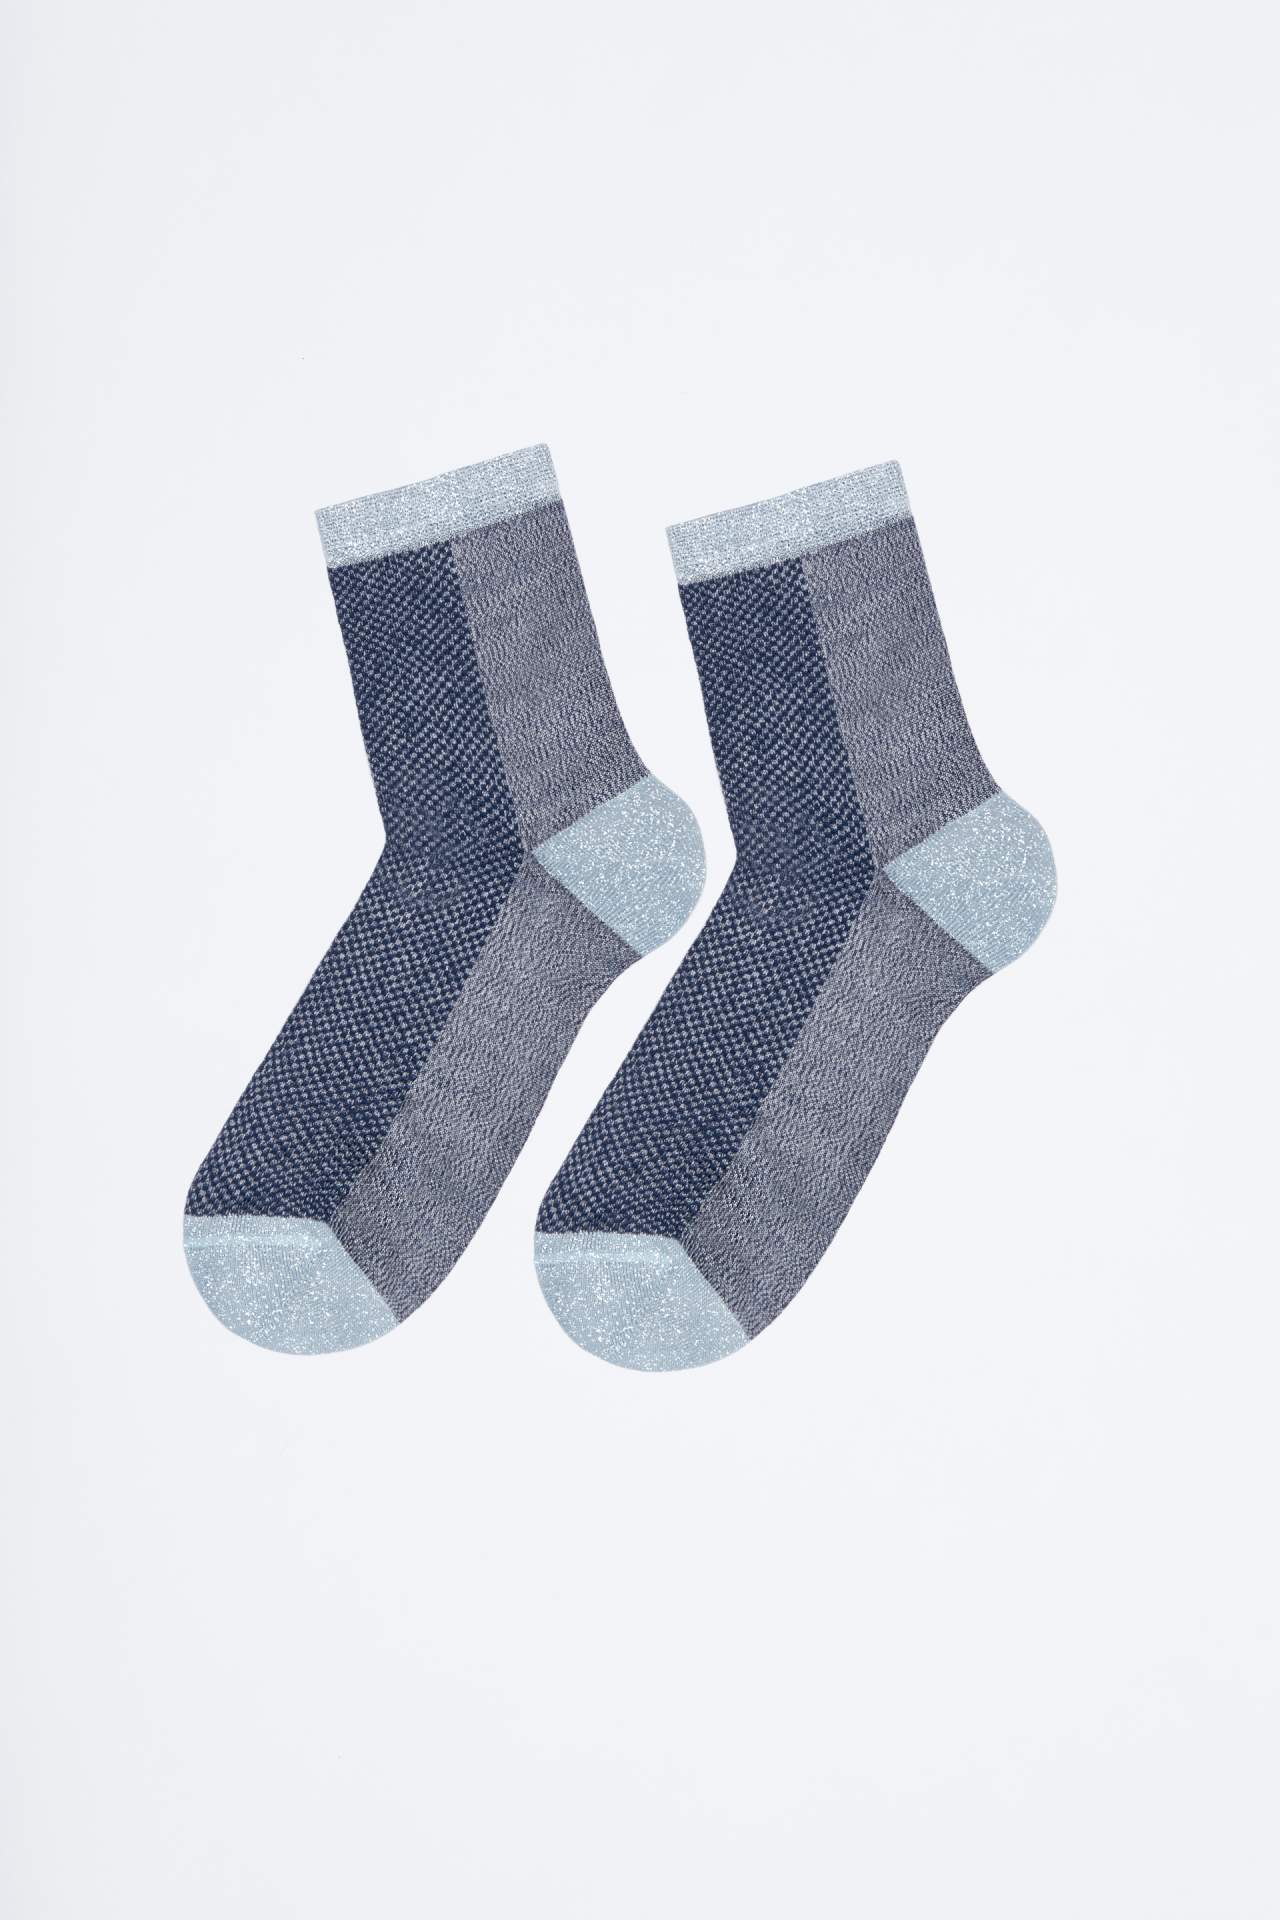 Charming Latisha blue melange Socken/Söckchen - Too Hot To Hide